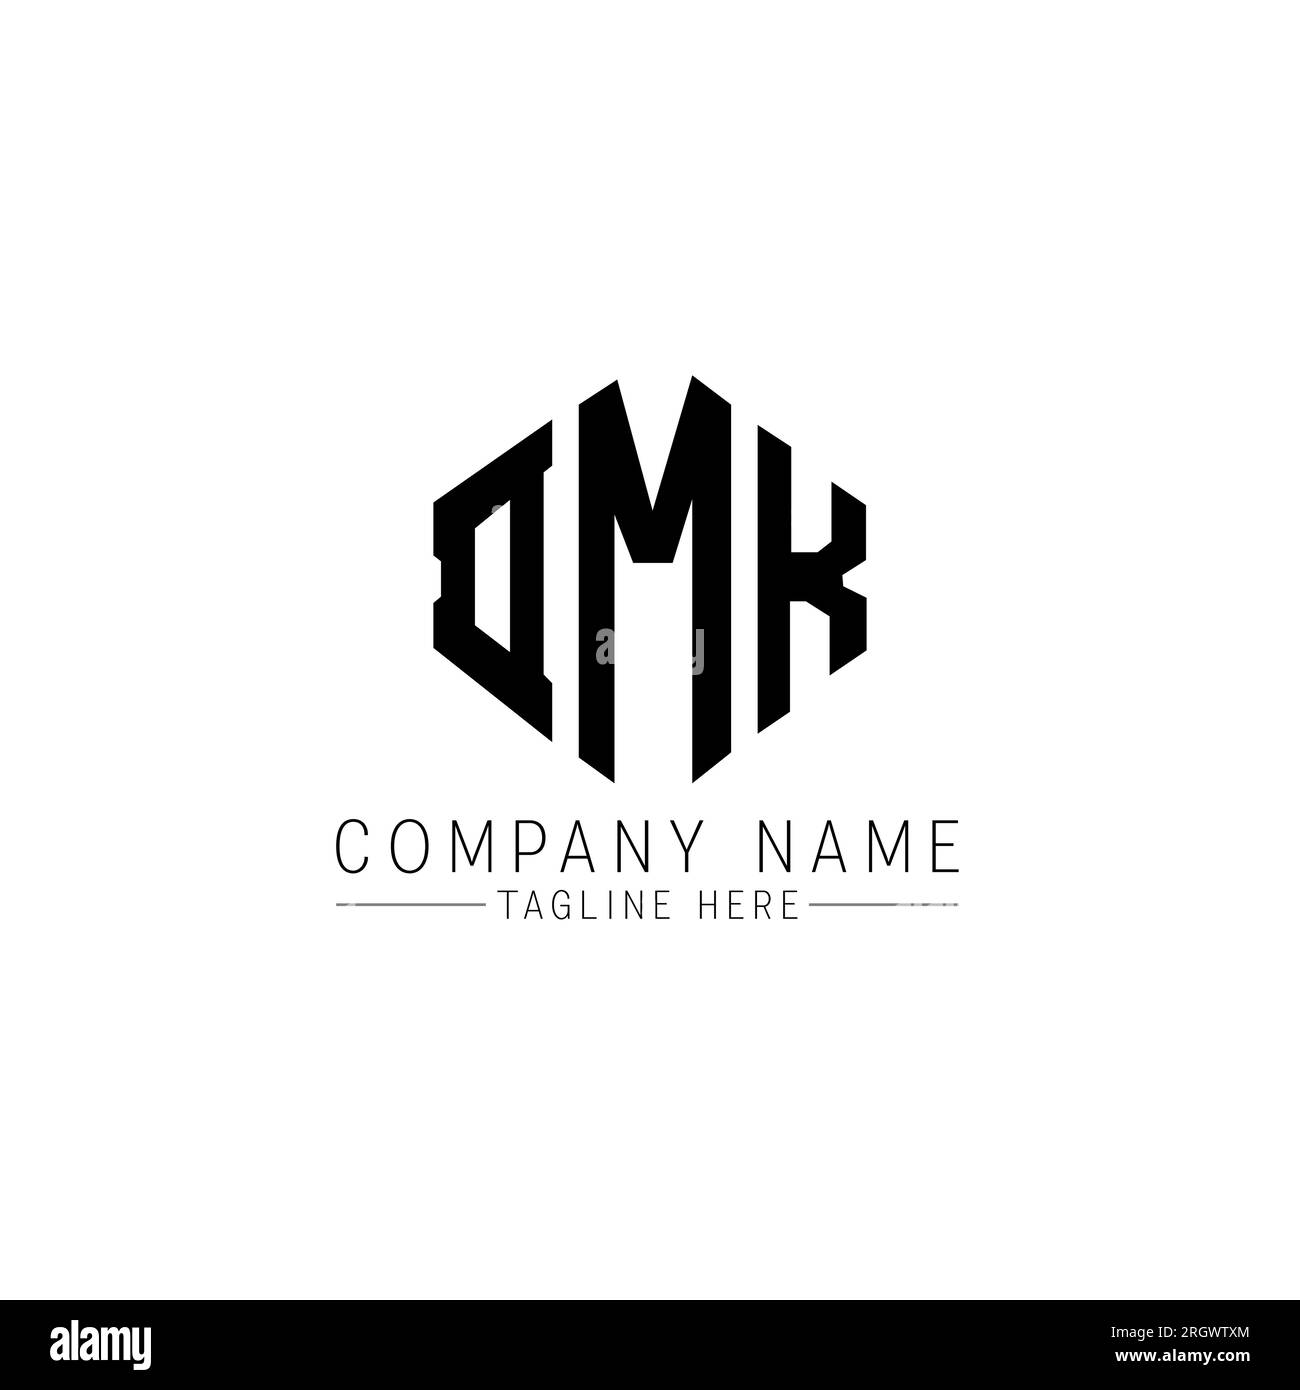 DMK letter logo design with polygon shape. DMK polygon and cube shape logo design. DMK hexagon vector logo template white and black colors. DMK monogr Stock Vector